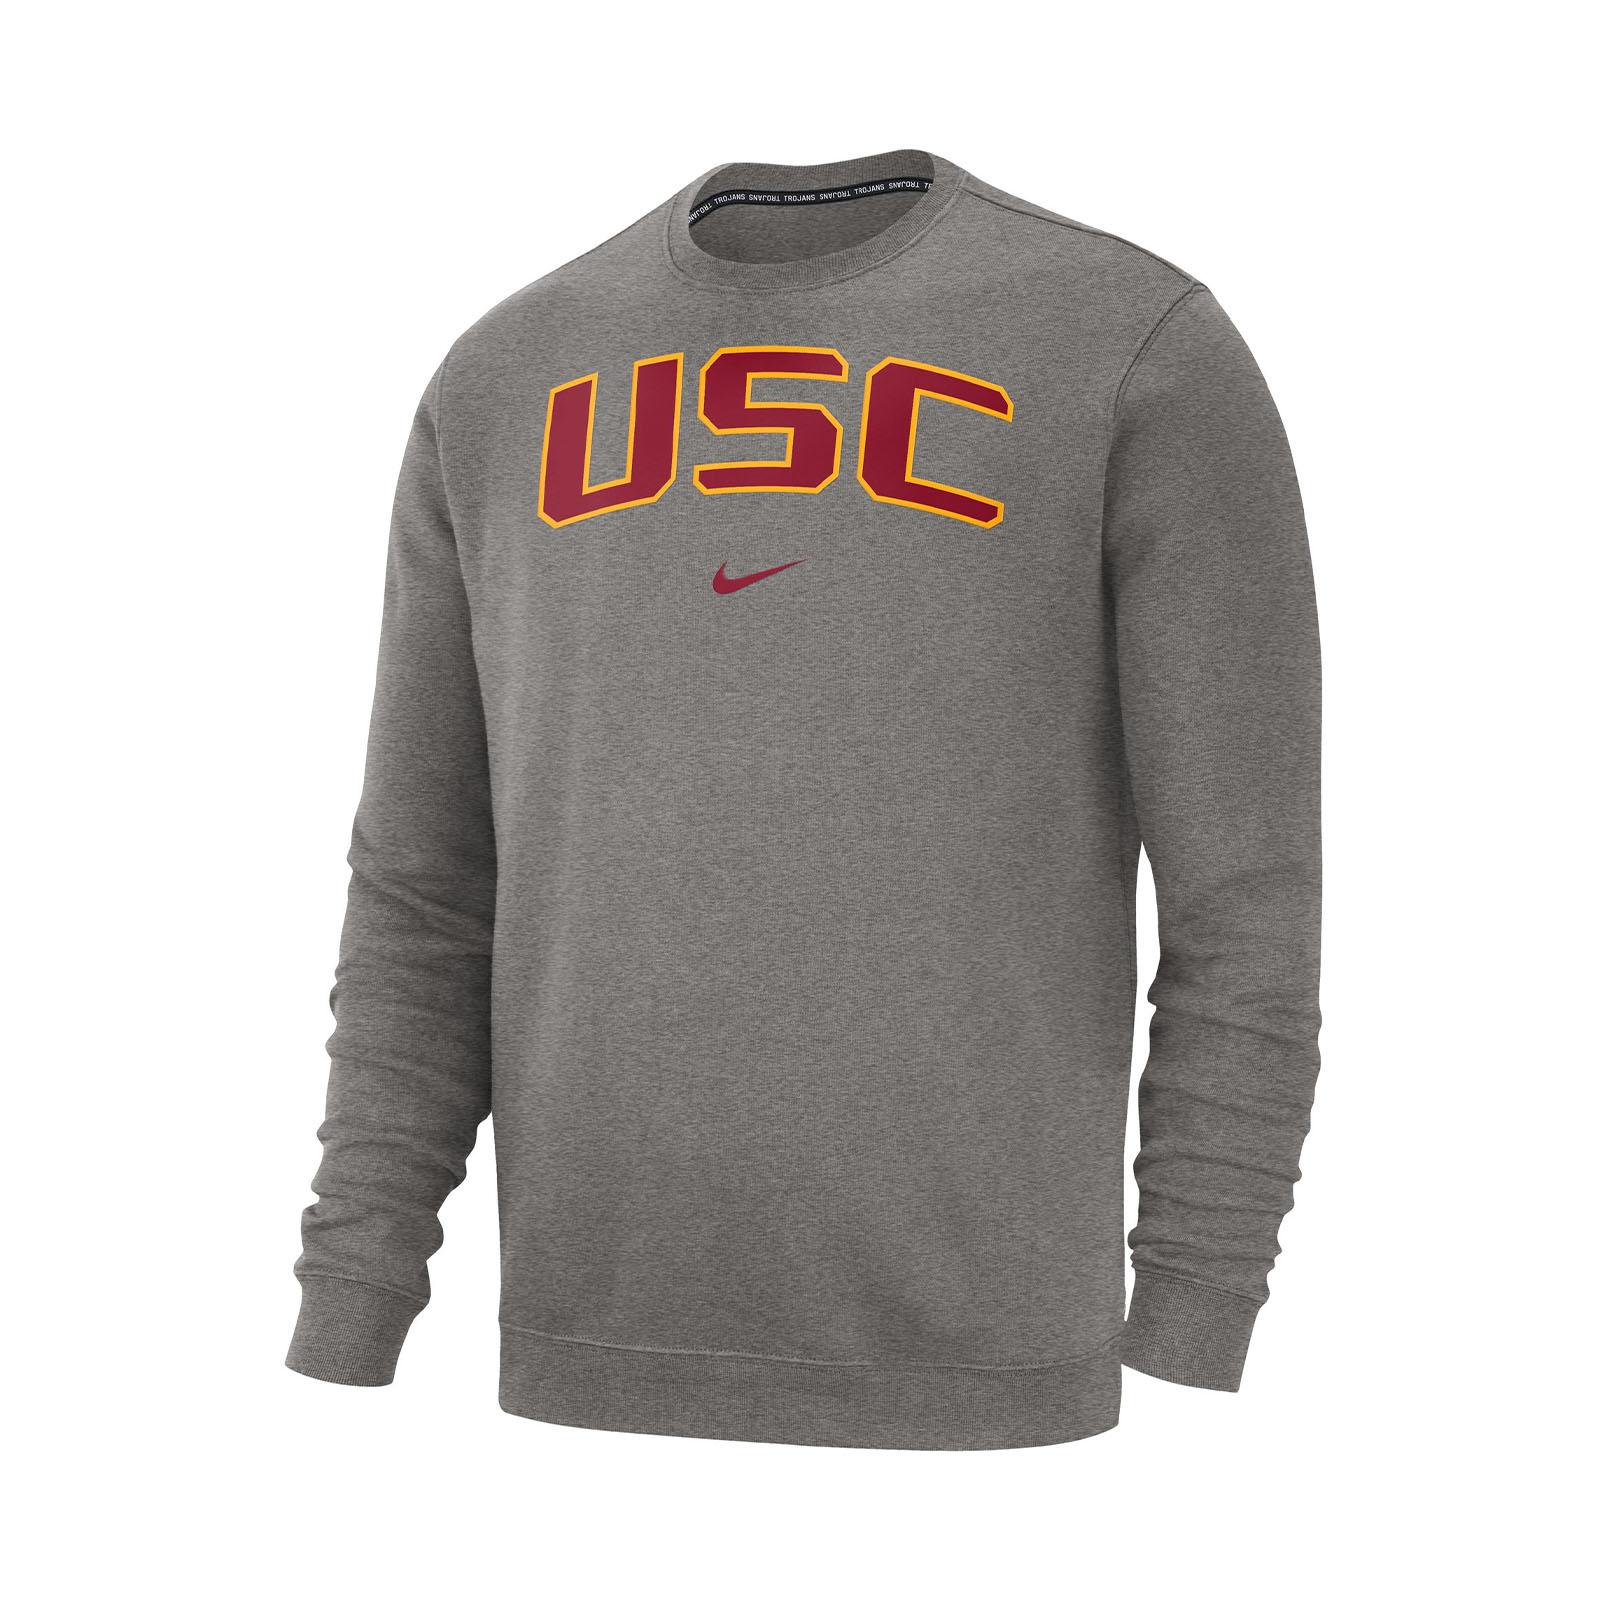 USC Mens Club Crew Neck Sweatshirt image01